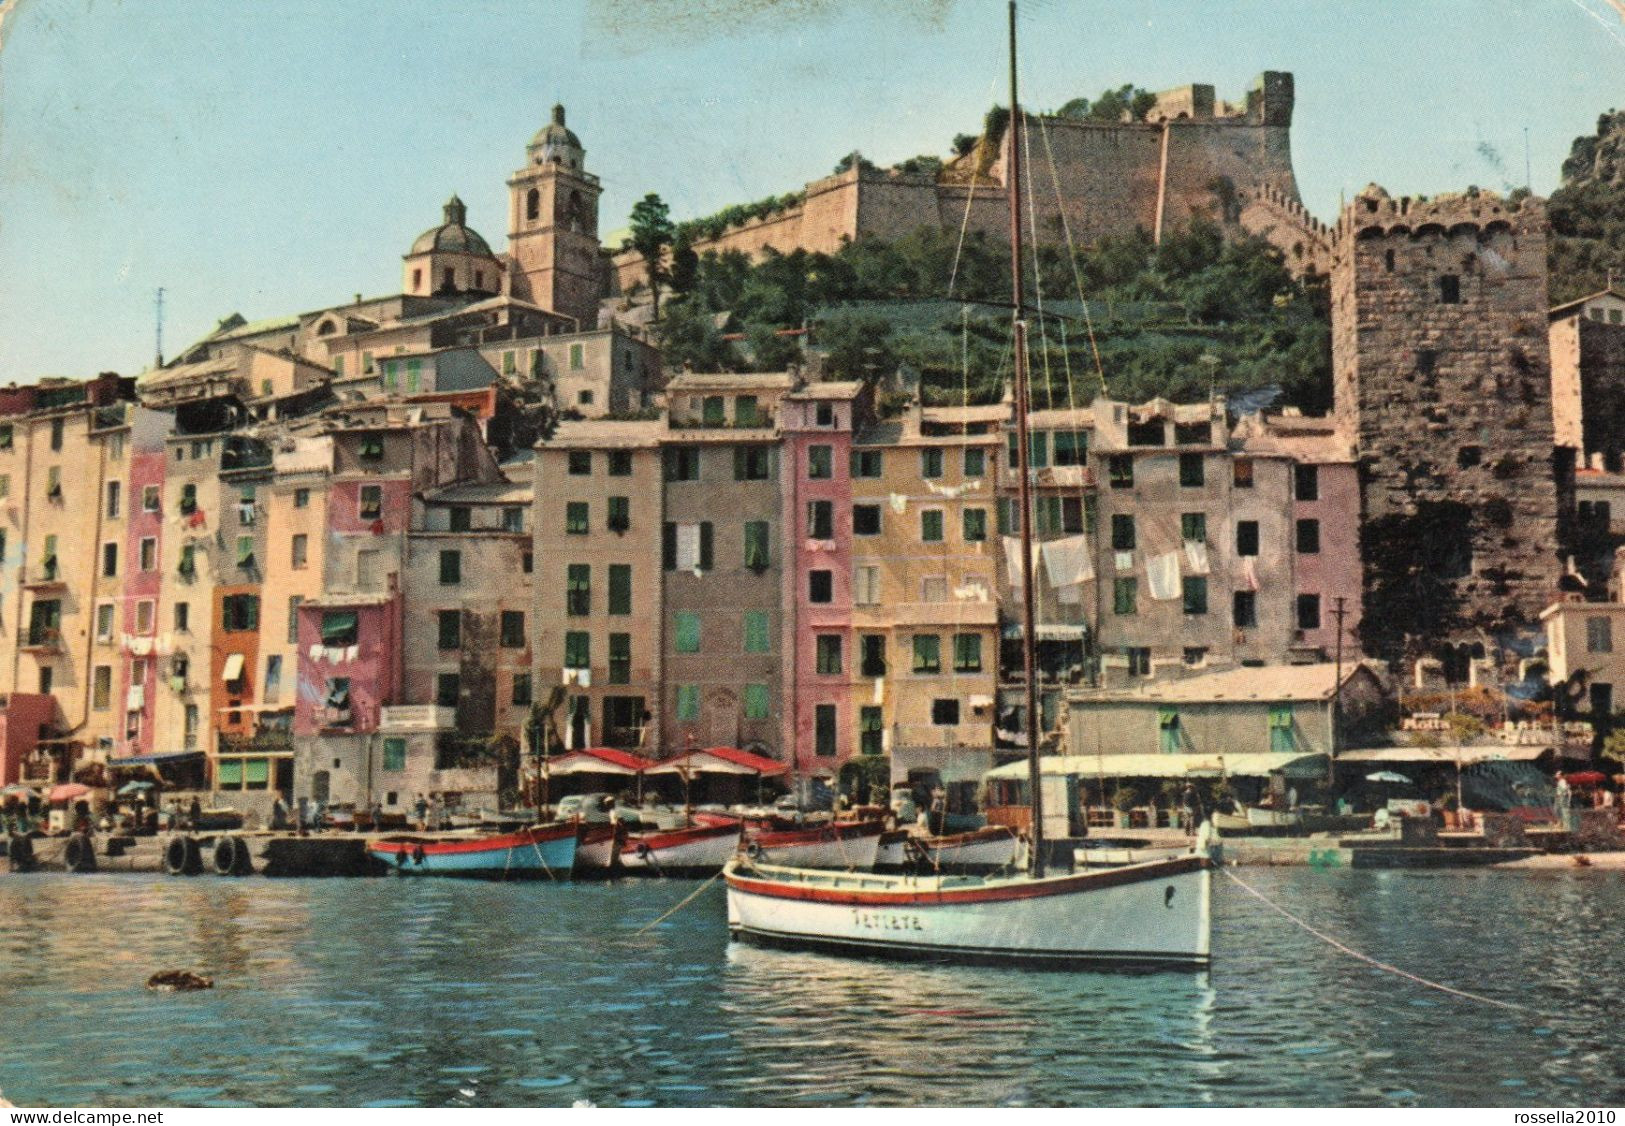 CARTOLINA ITALIA 1980 LA SPEZIA PORTOVENERE LA MARINA Italy Postcard ITALIEN Ansichtskarten - La Spezia